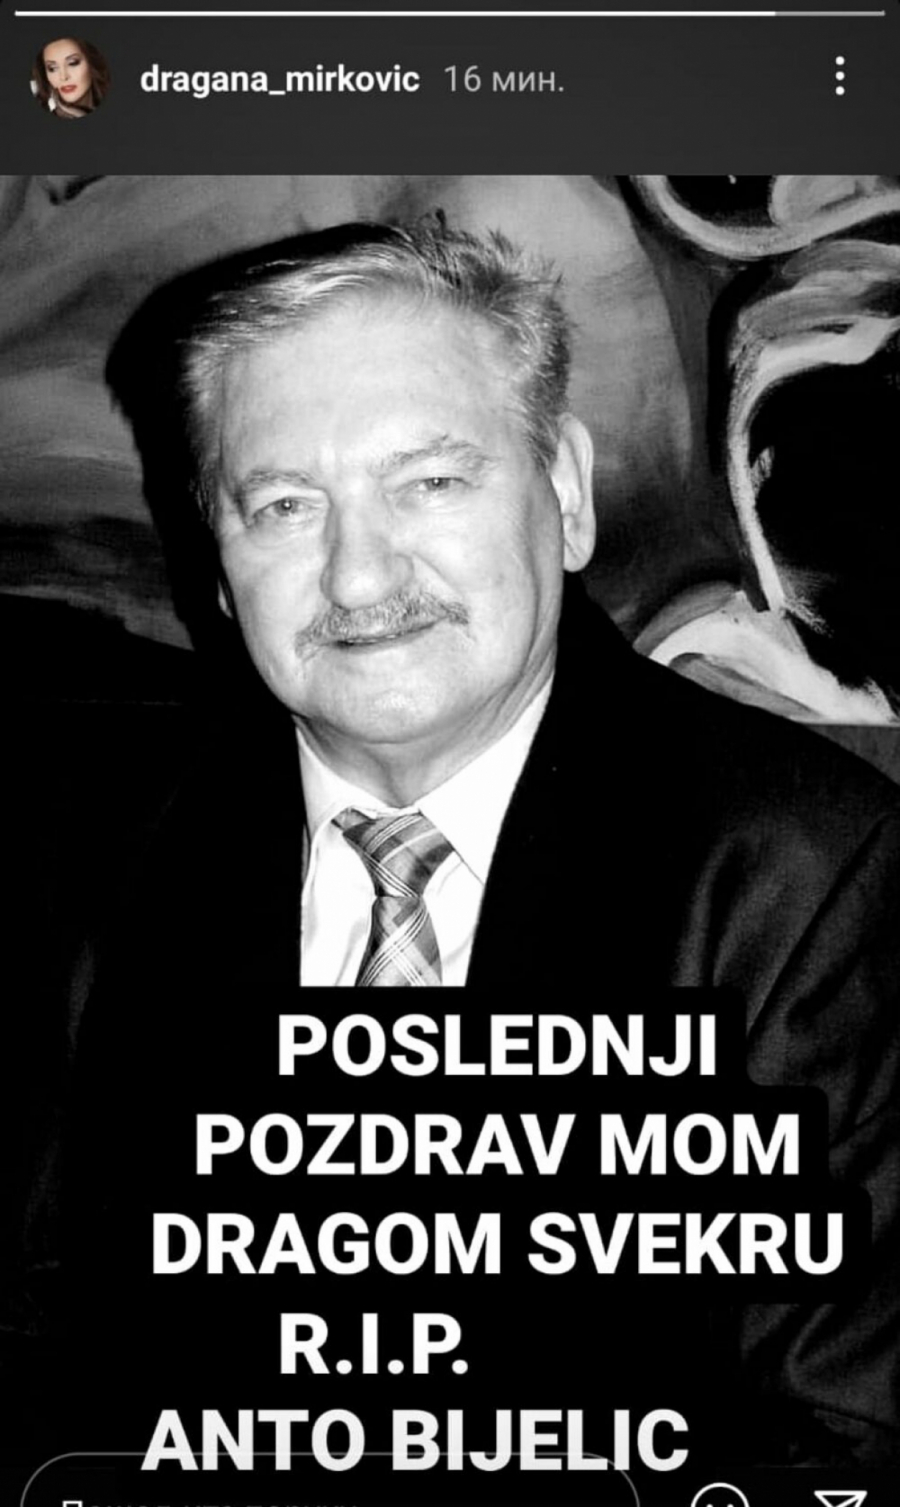 POSLEDNJI POZDRAV Dragana Mirković ne krije tugu zbog smrti svekra, porodica neutešna! (FOTO)